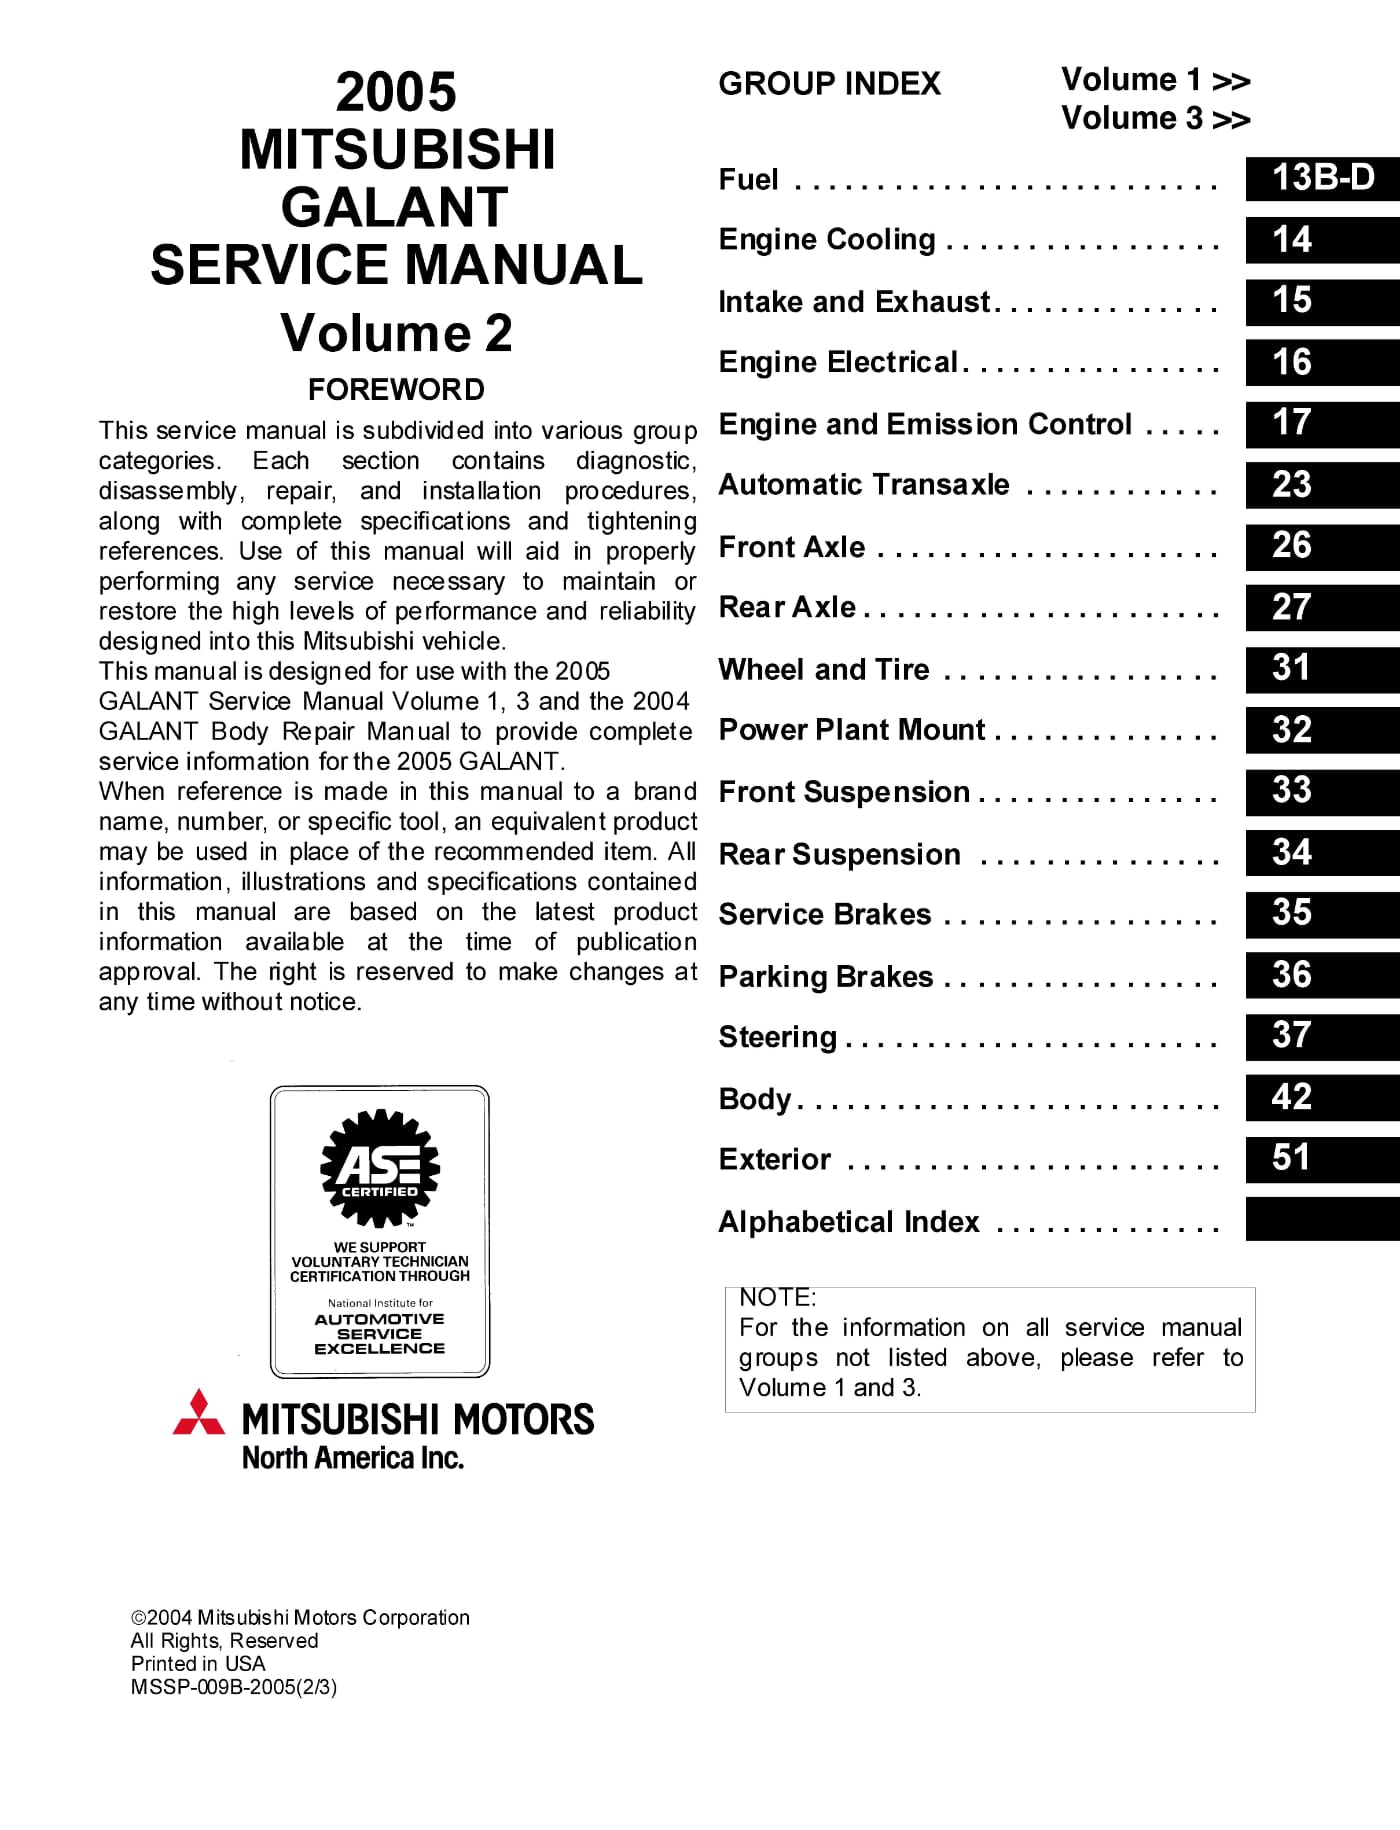 Table of Content 2005 Mitsubishi Galant Repair Manual - Volume 2